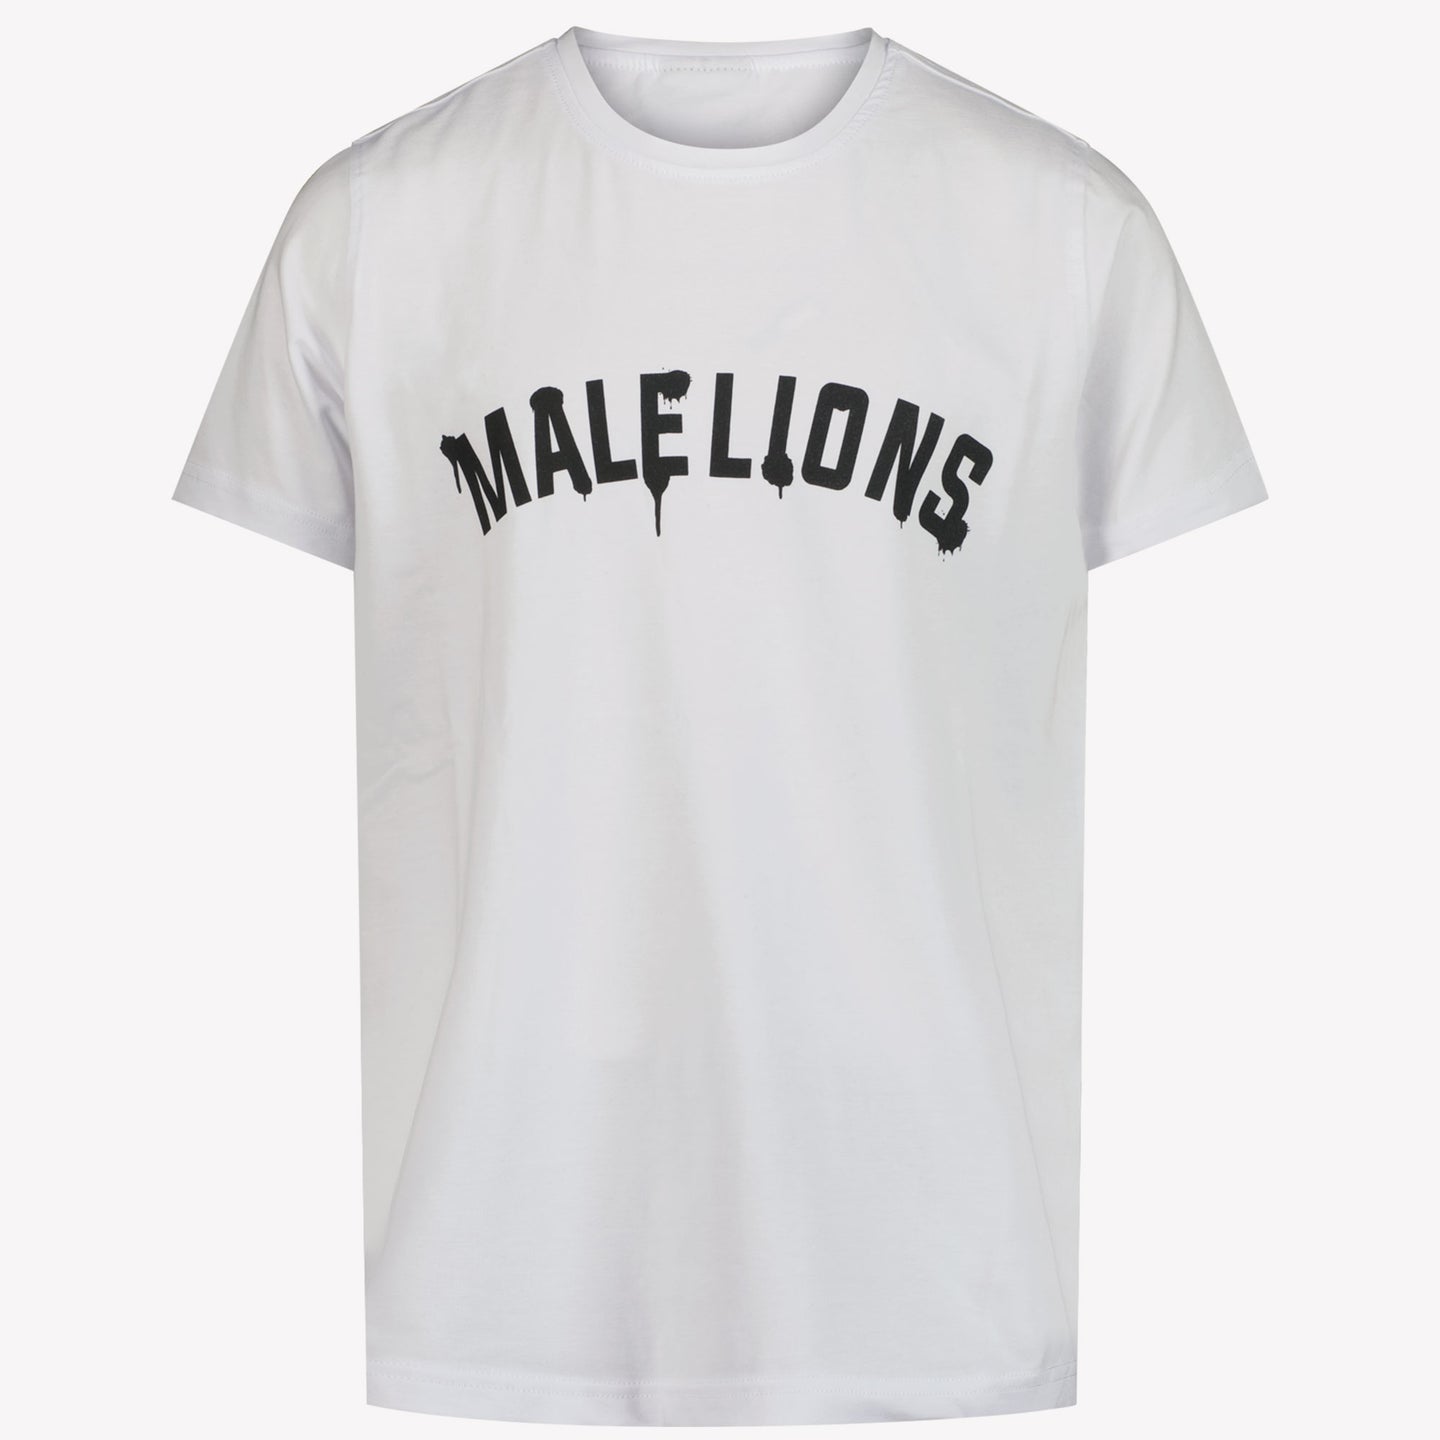 Malelions unisex camiseta blanca